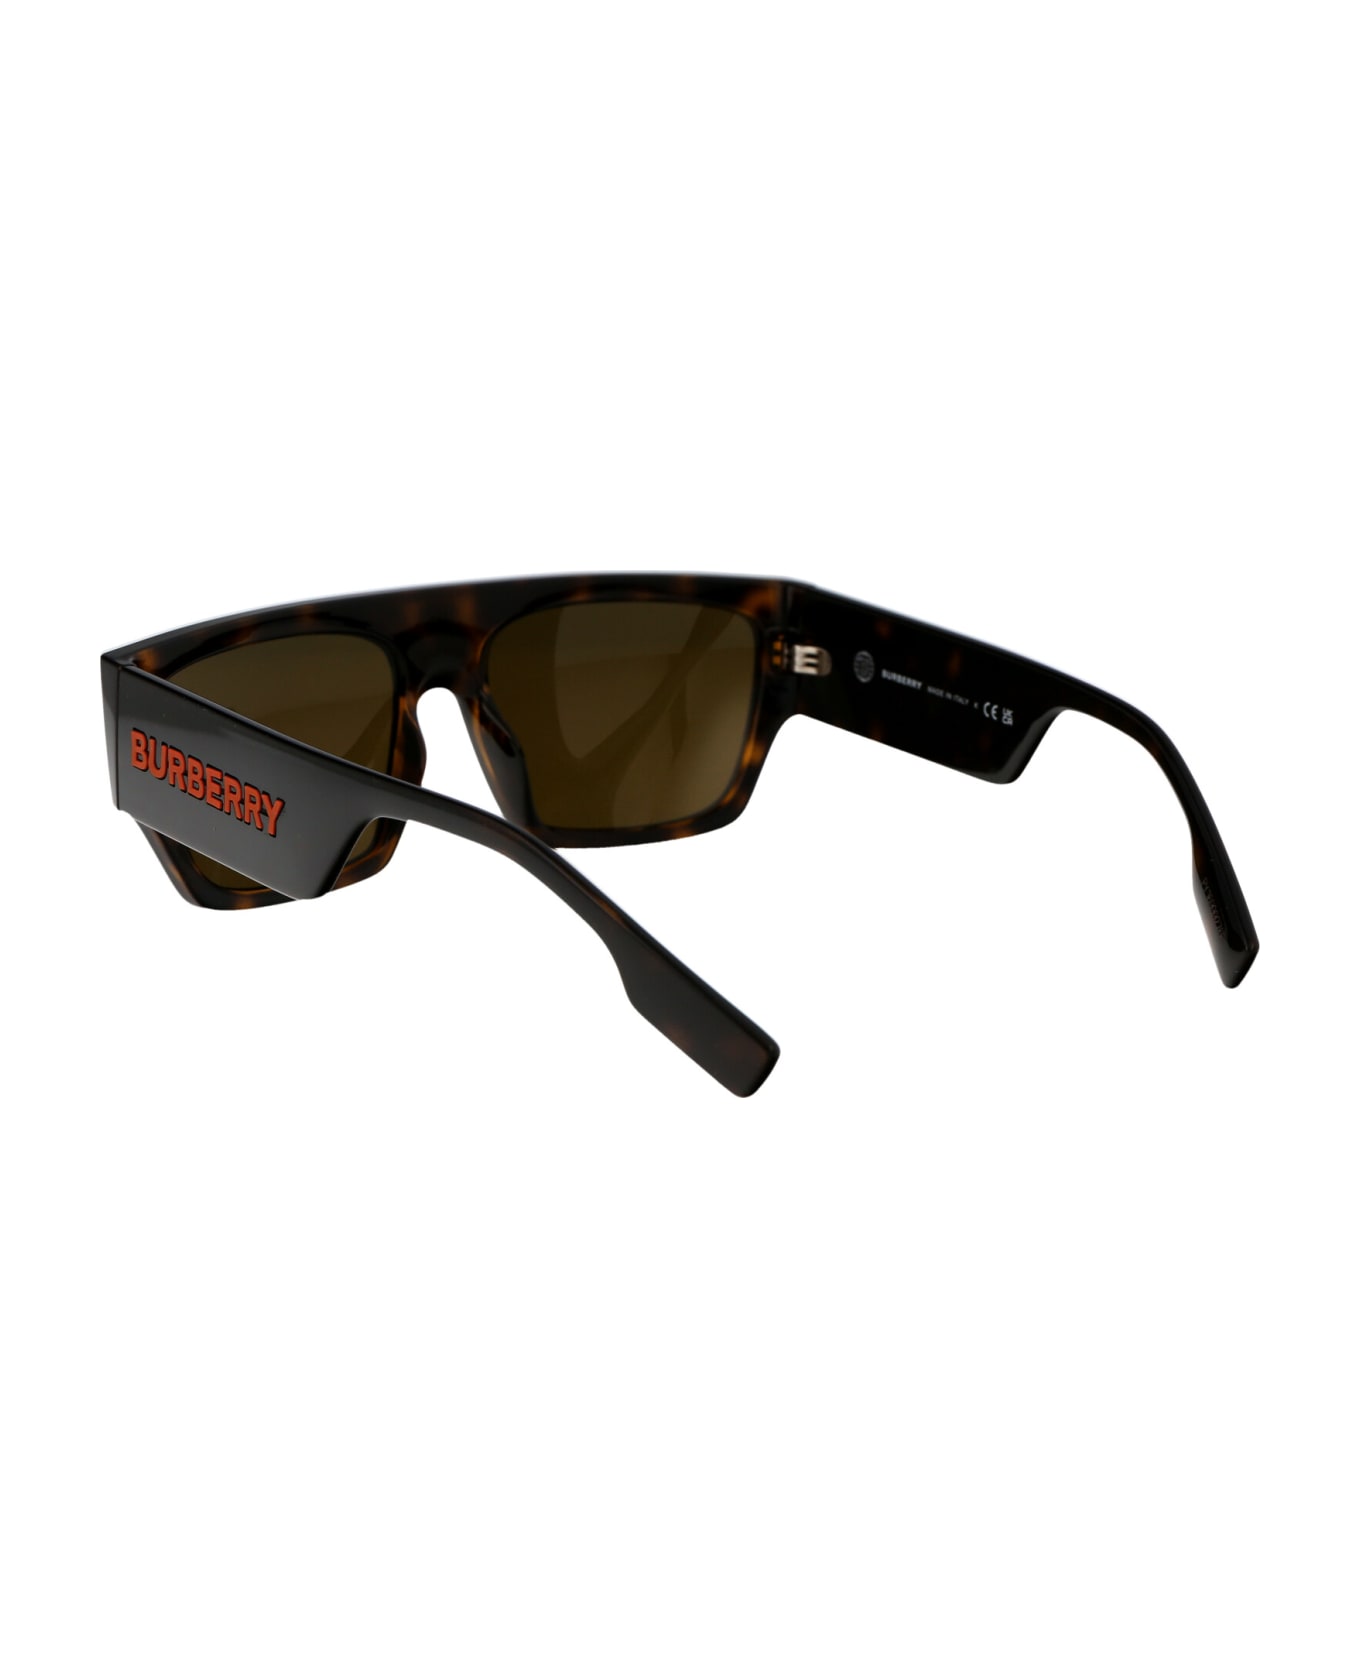 Burberry Eyewear Micah Sunglasses - 300273 DARK HAVANA